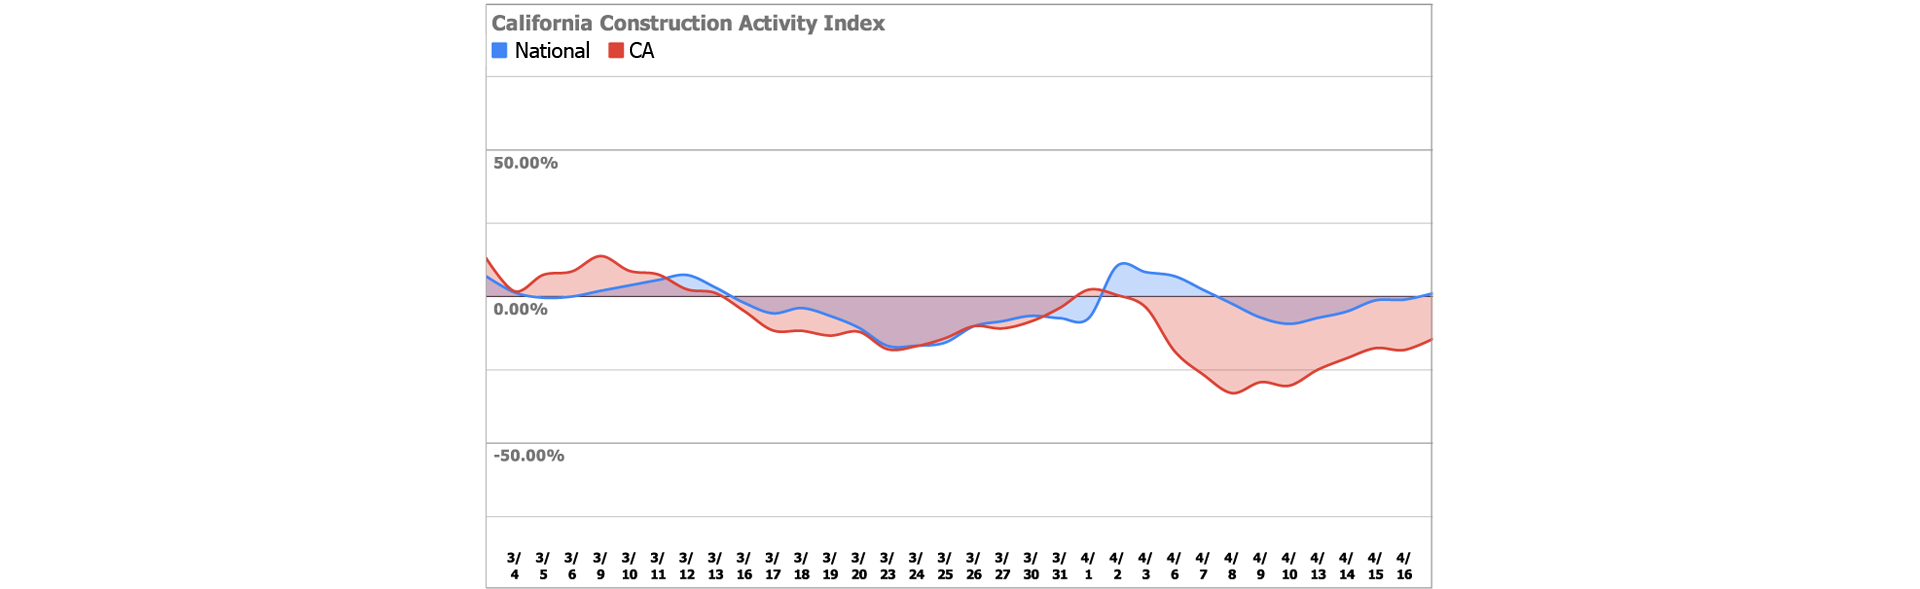 CA construction activity index